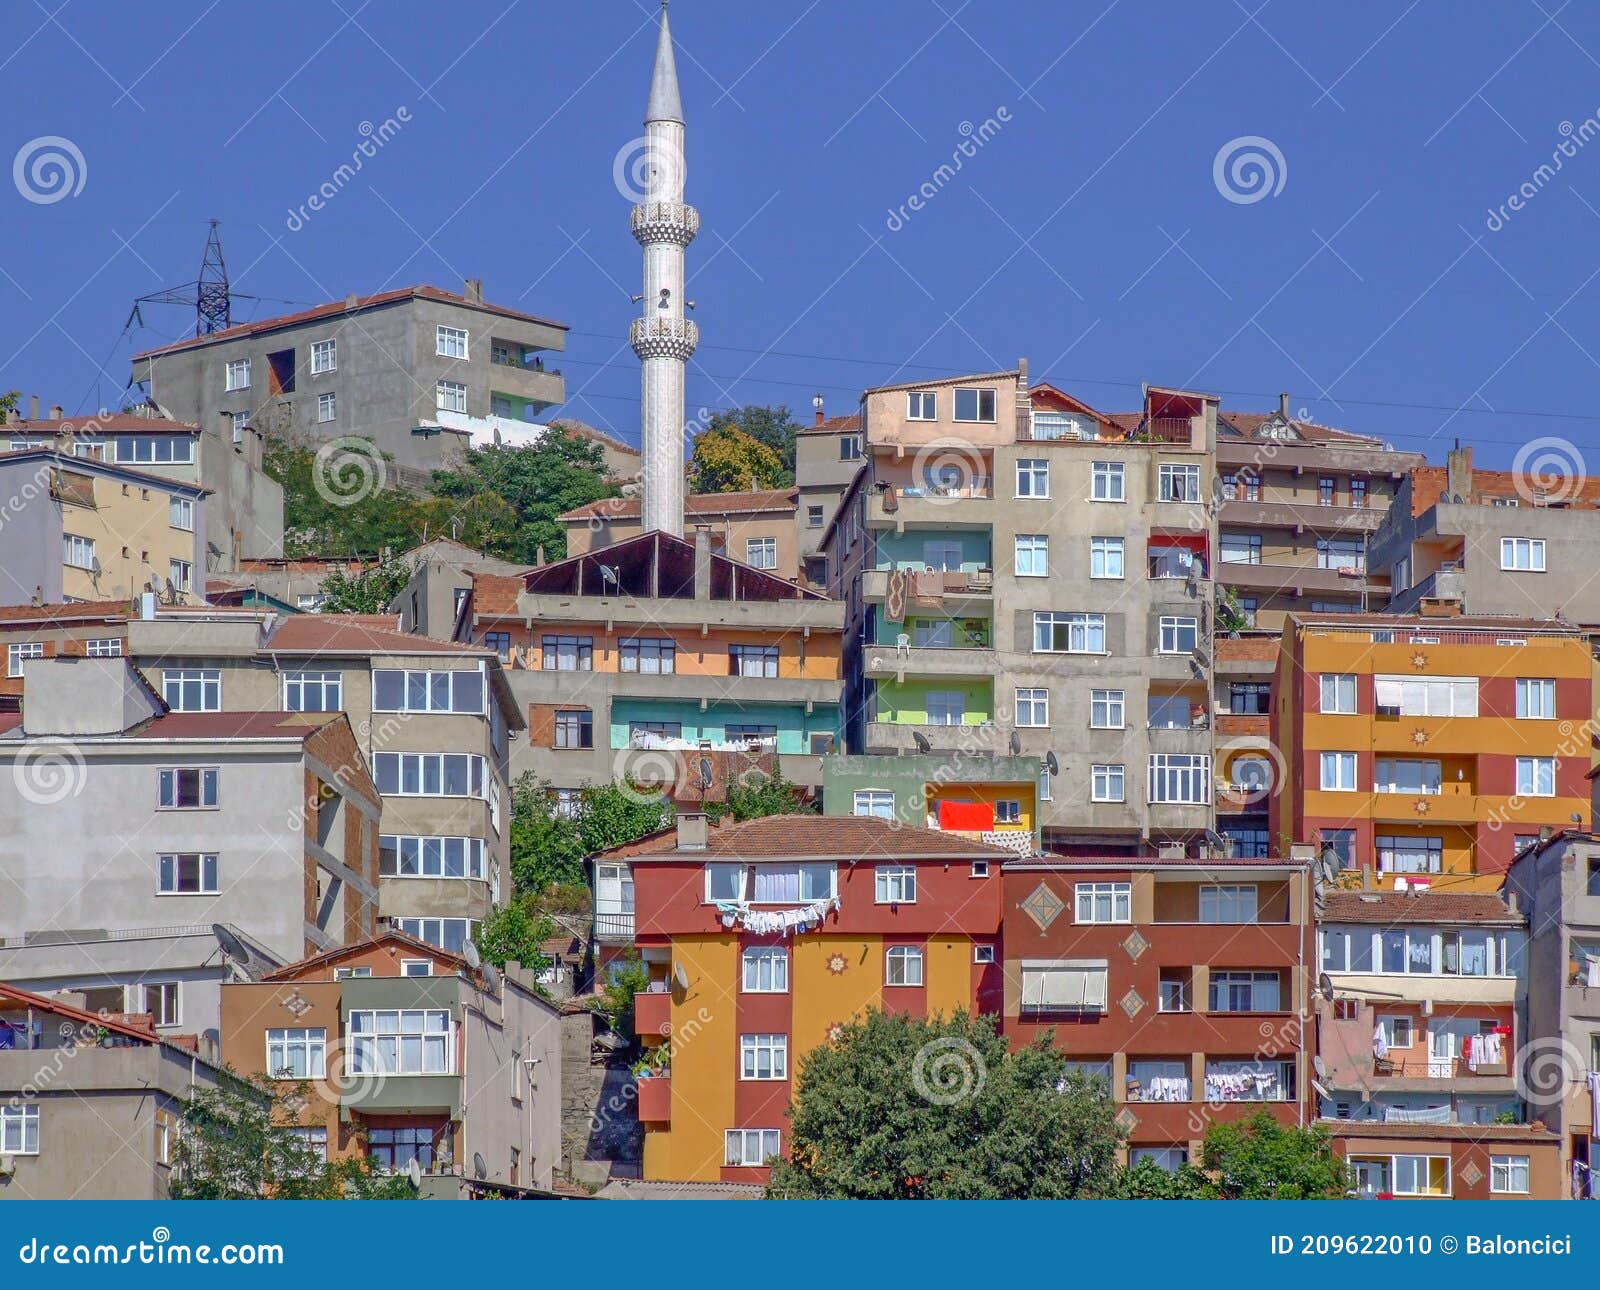 beyoglu istanbul